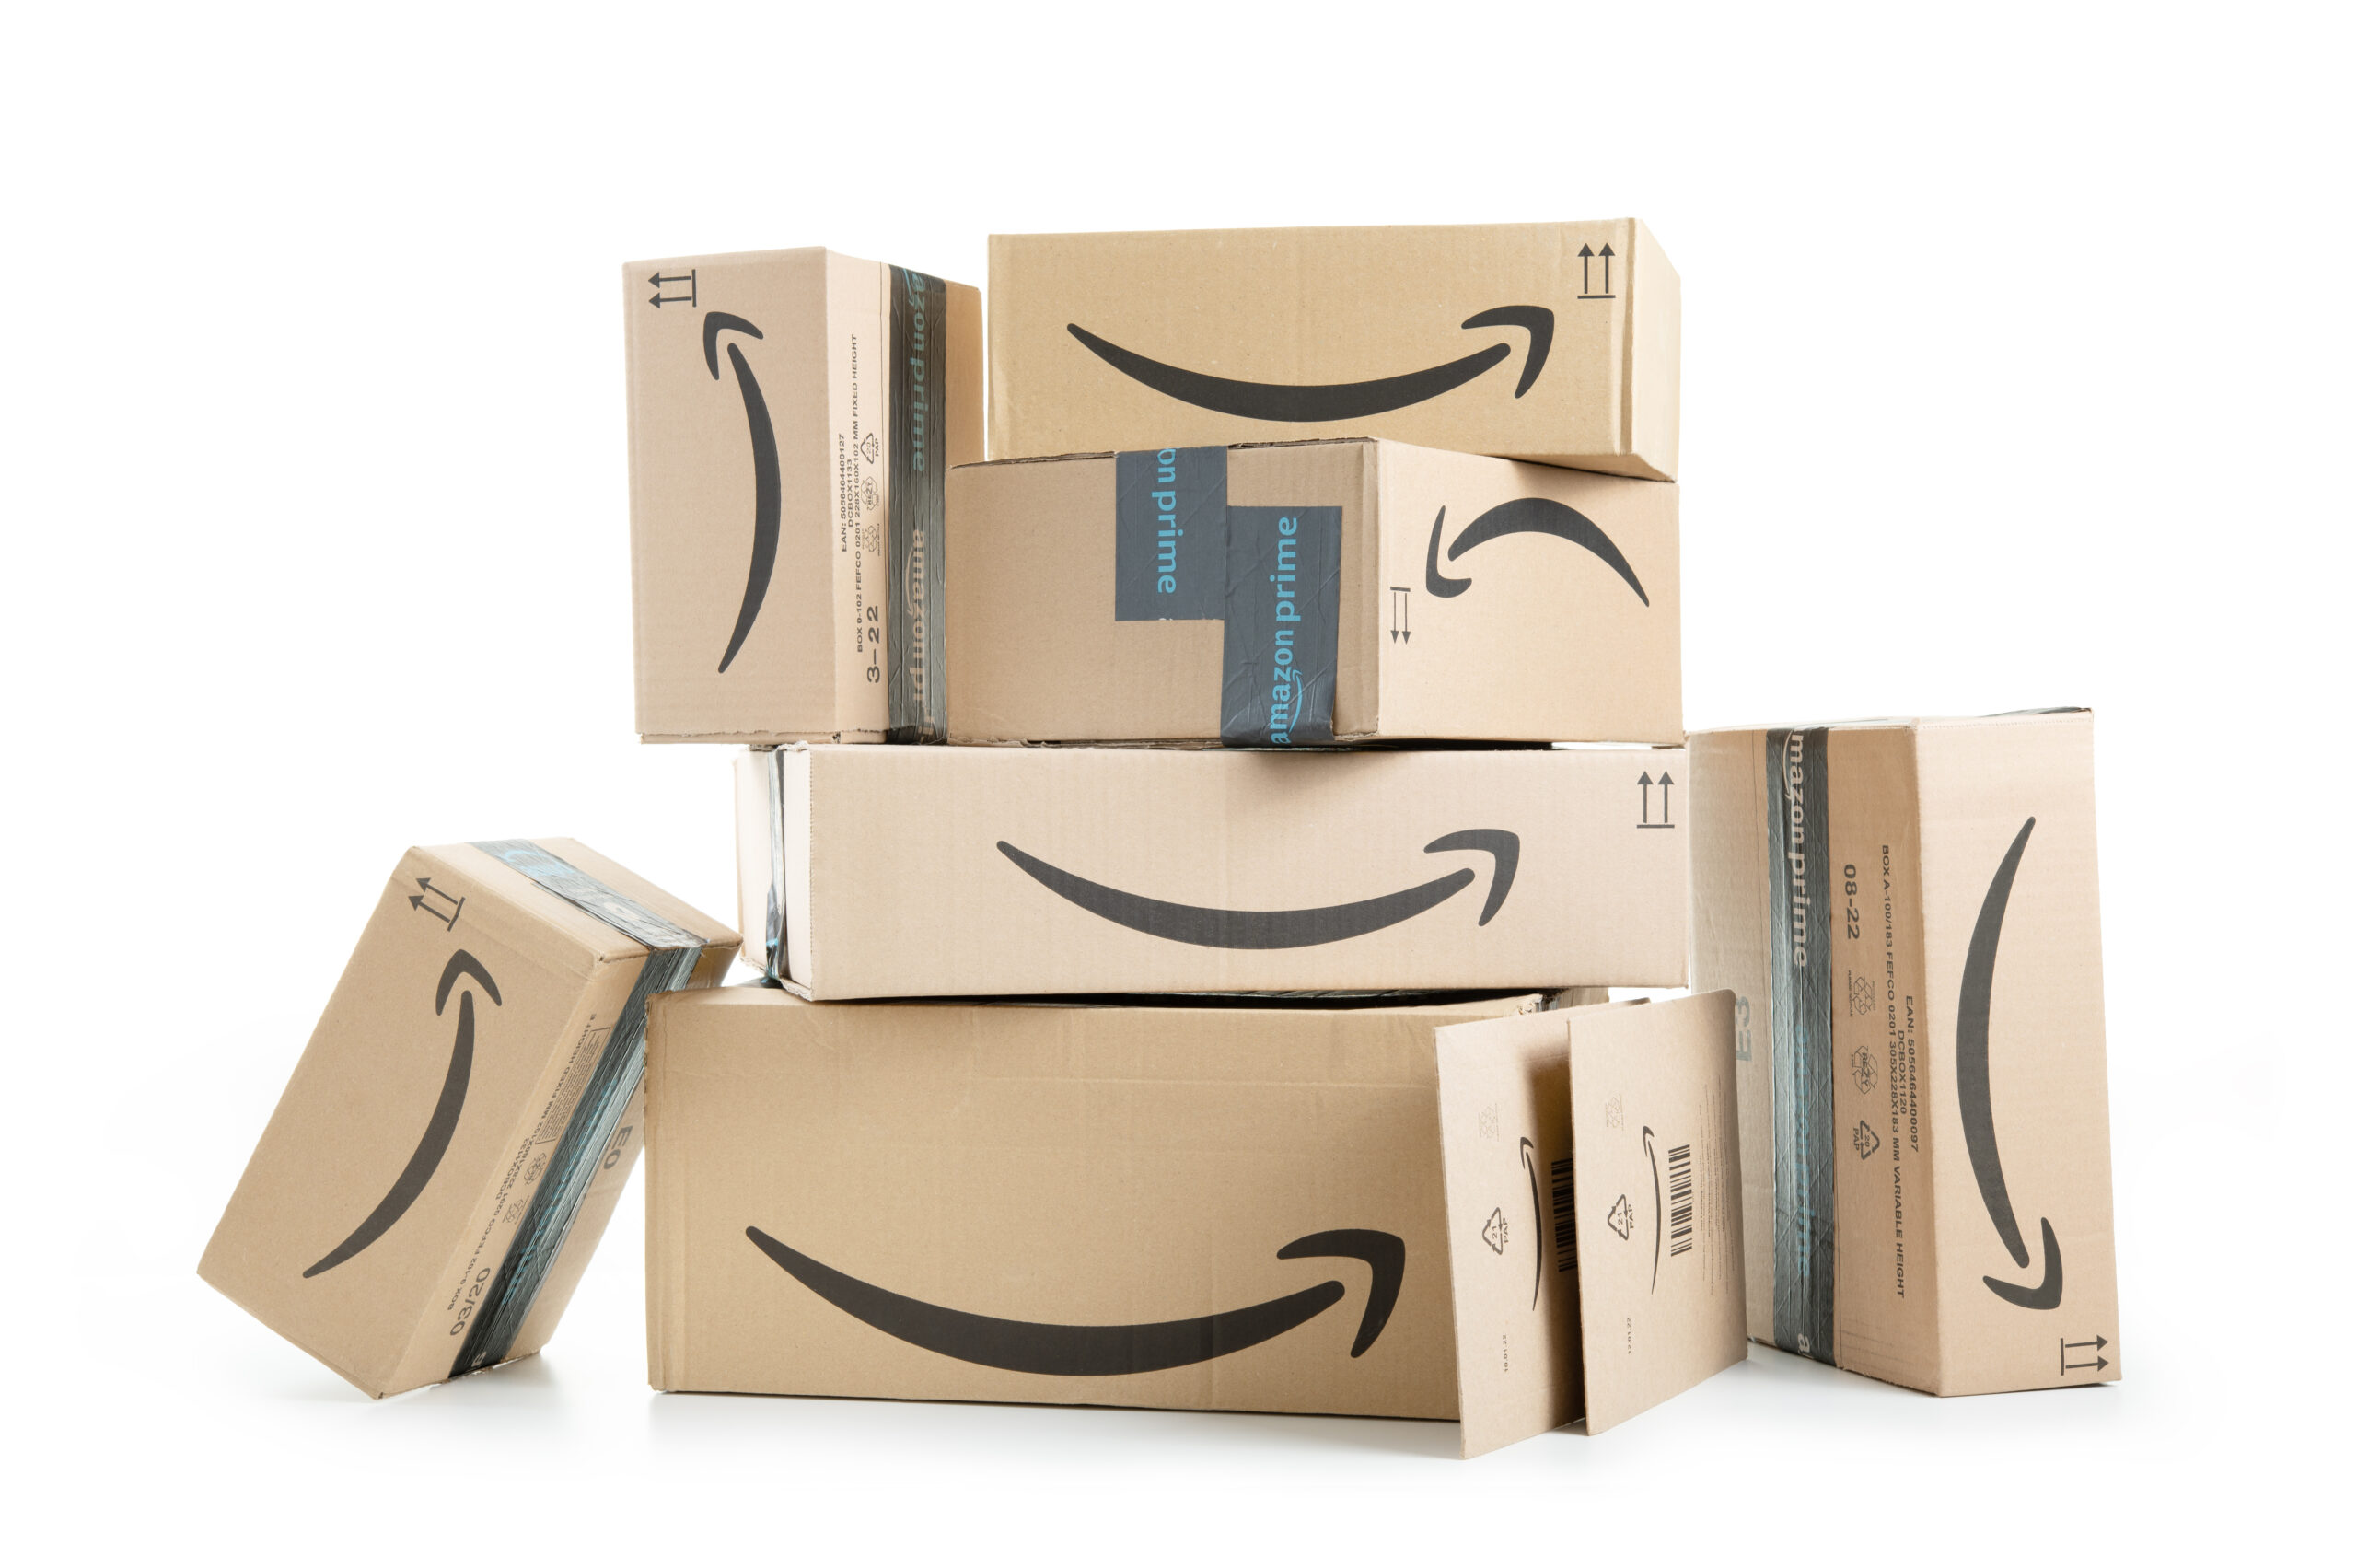 Amazon Prime Kartons gestapelt